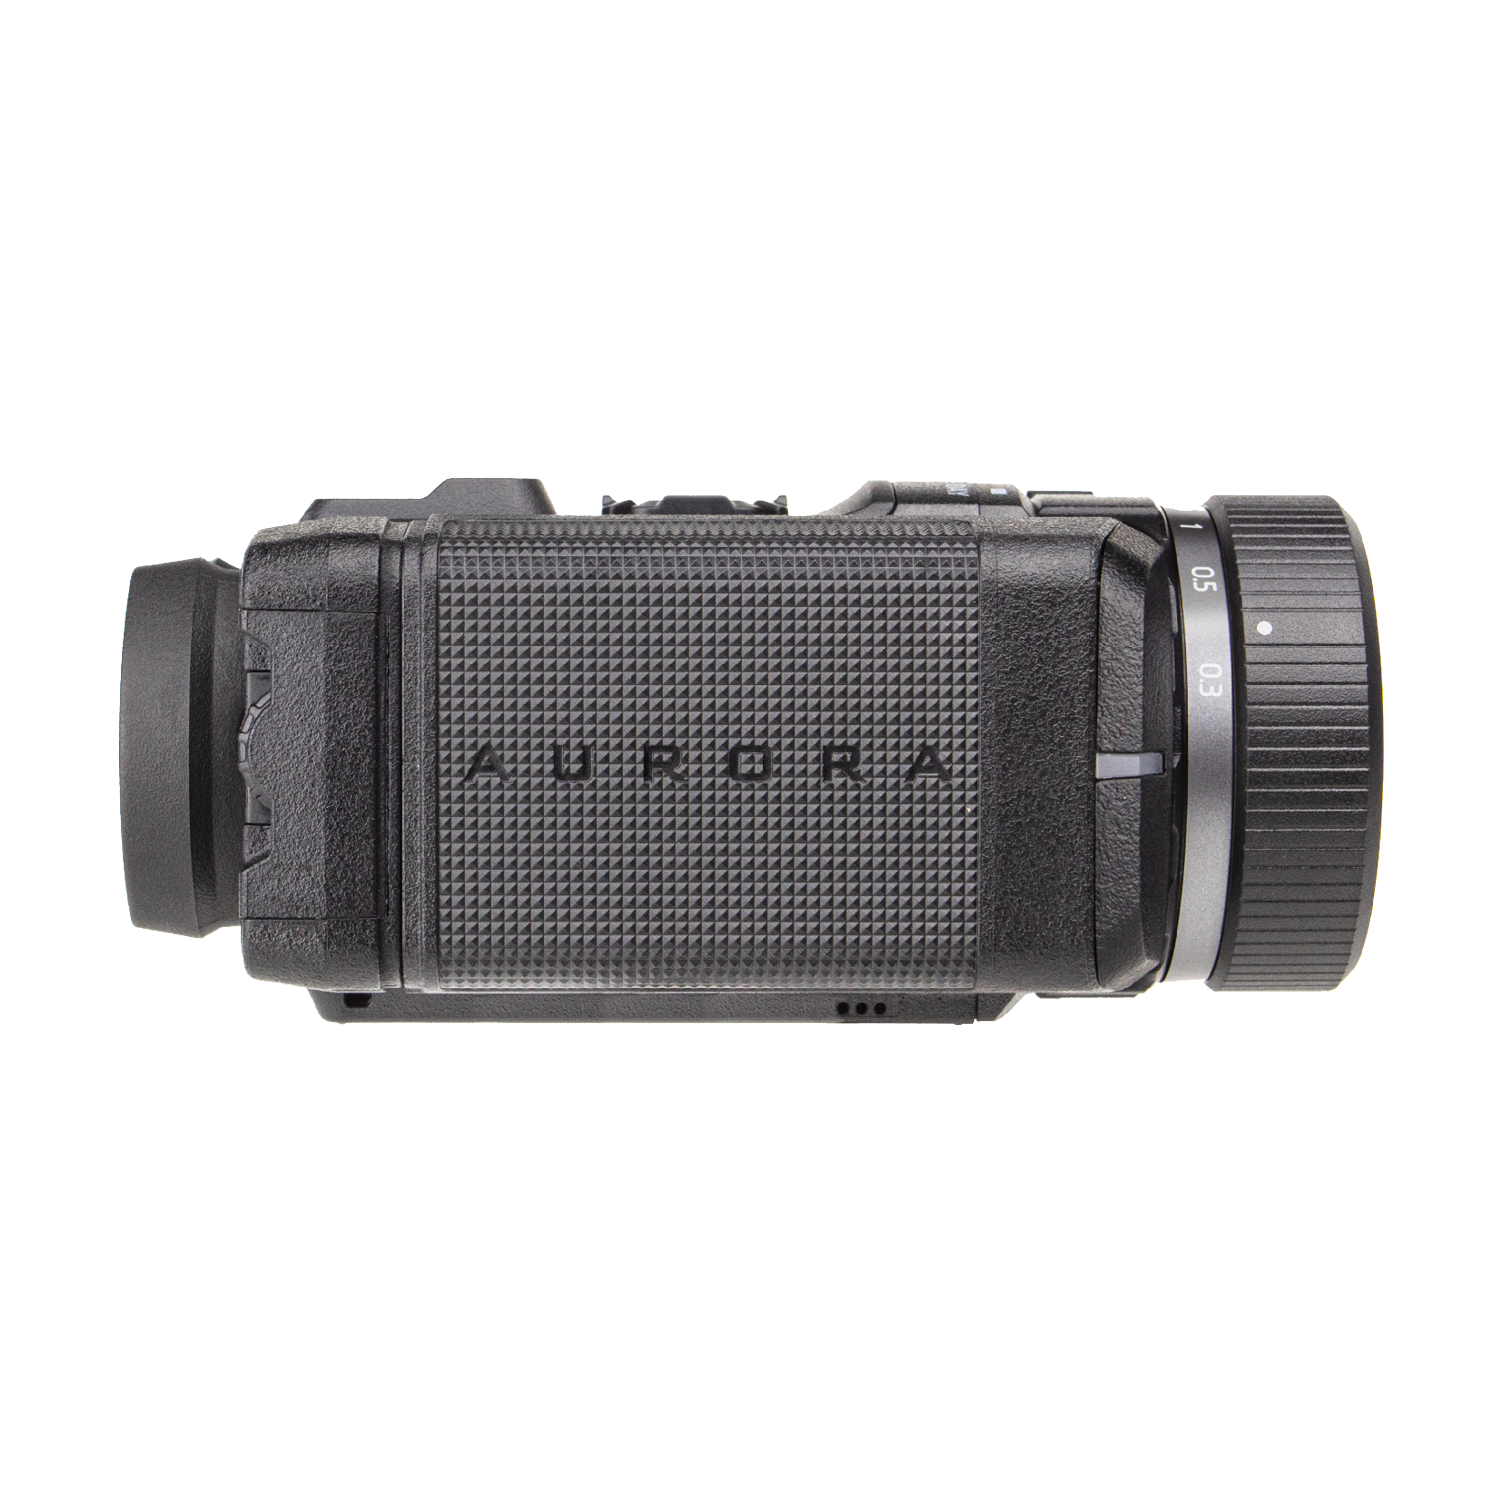 SiOnyx Aurora Black Full-Color Digital Night Vision Camera